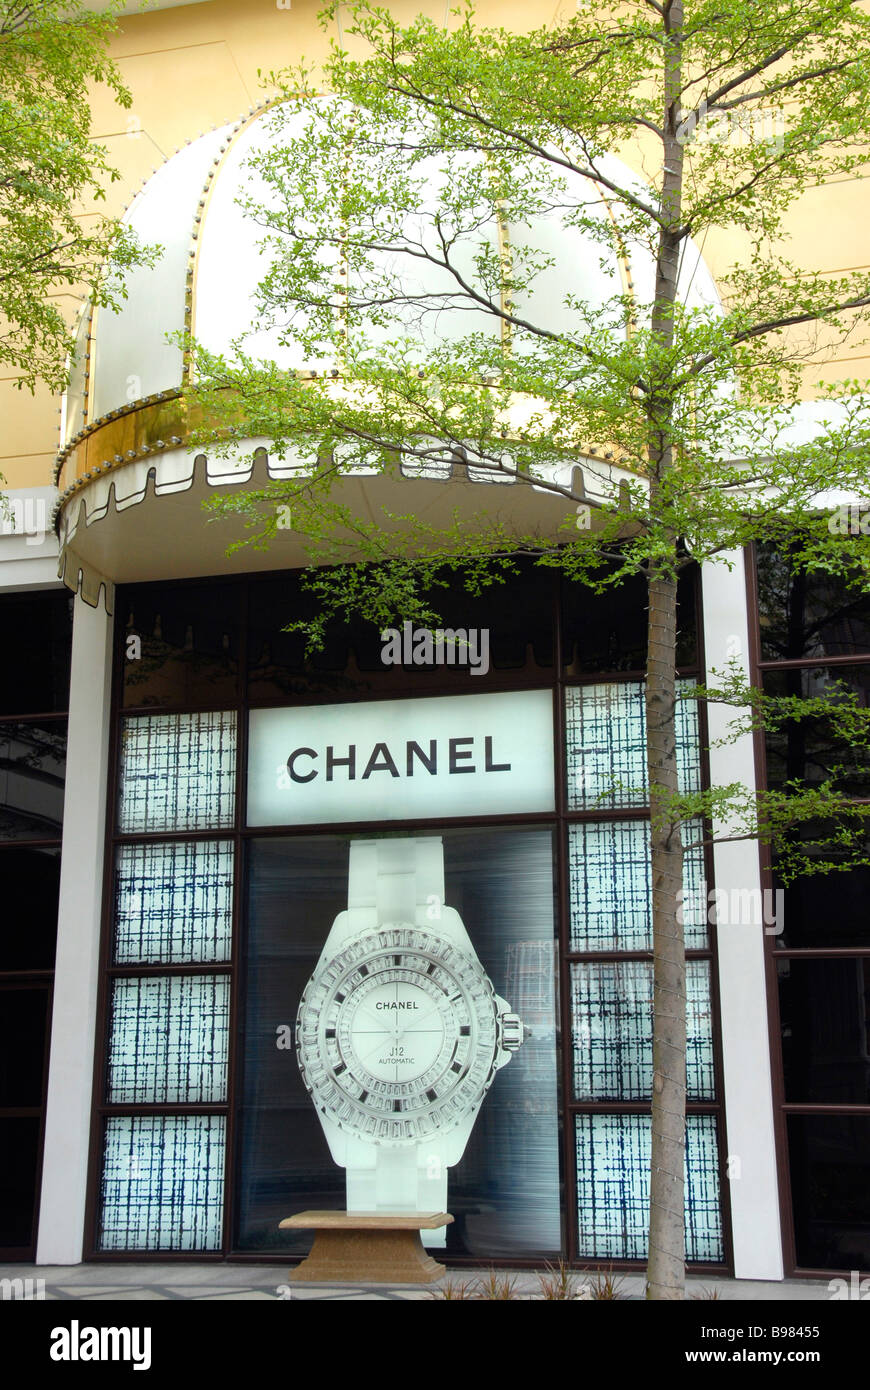 Chanel store, Wynn hotel casino, Macau, China Stock Photo - Alamy